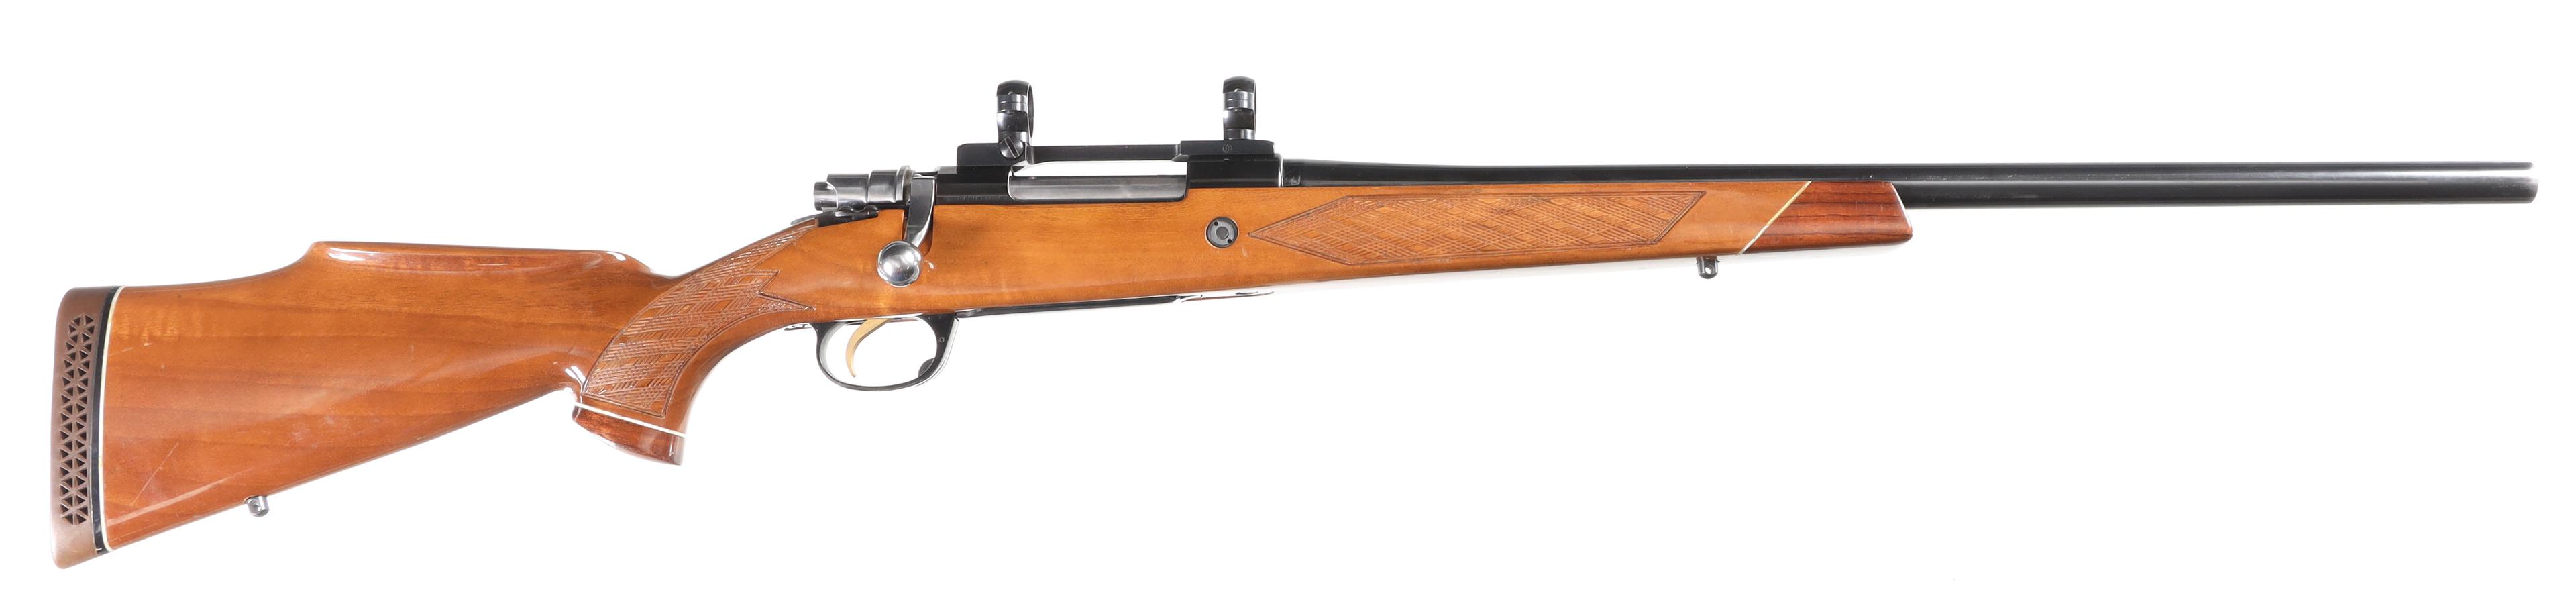 Parker Hale 98 Sporter Bolt Rifle 6 mm Unknown